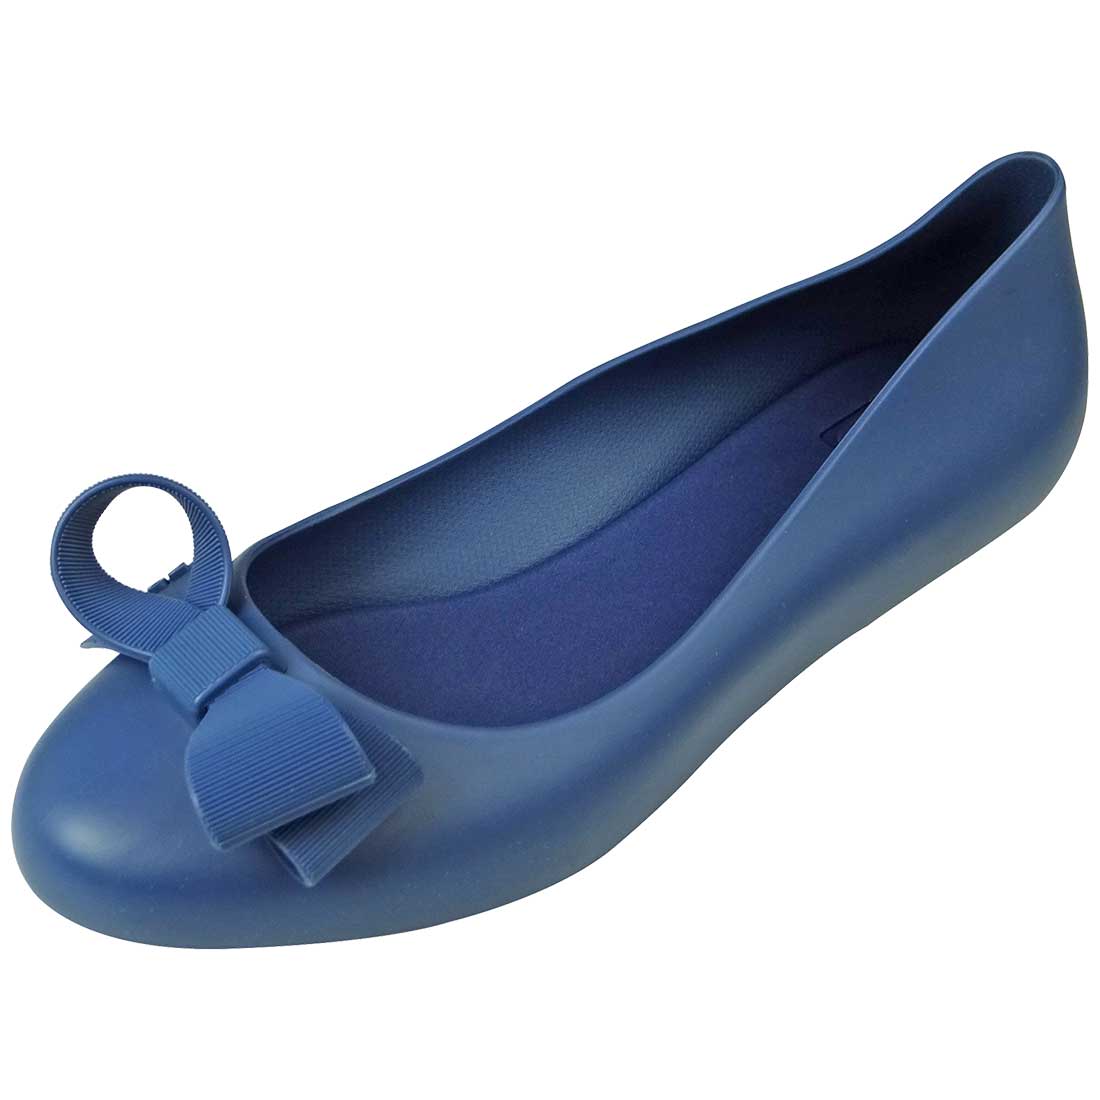 Sapatilha Zaxy Classy - Azul